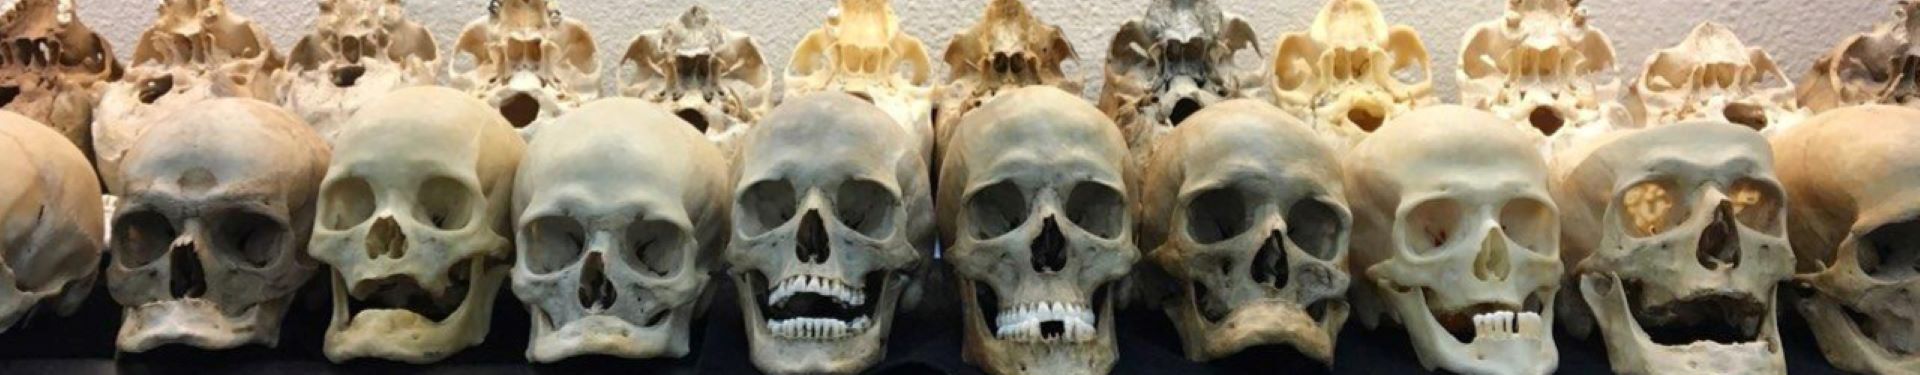 impact image of skulls